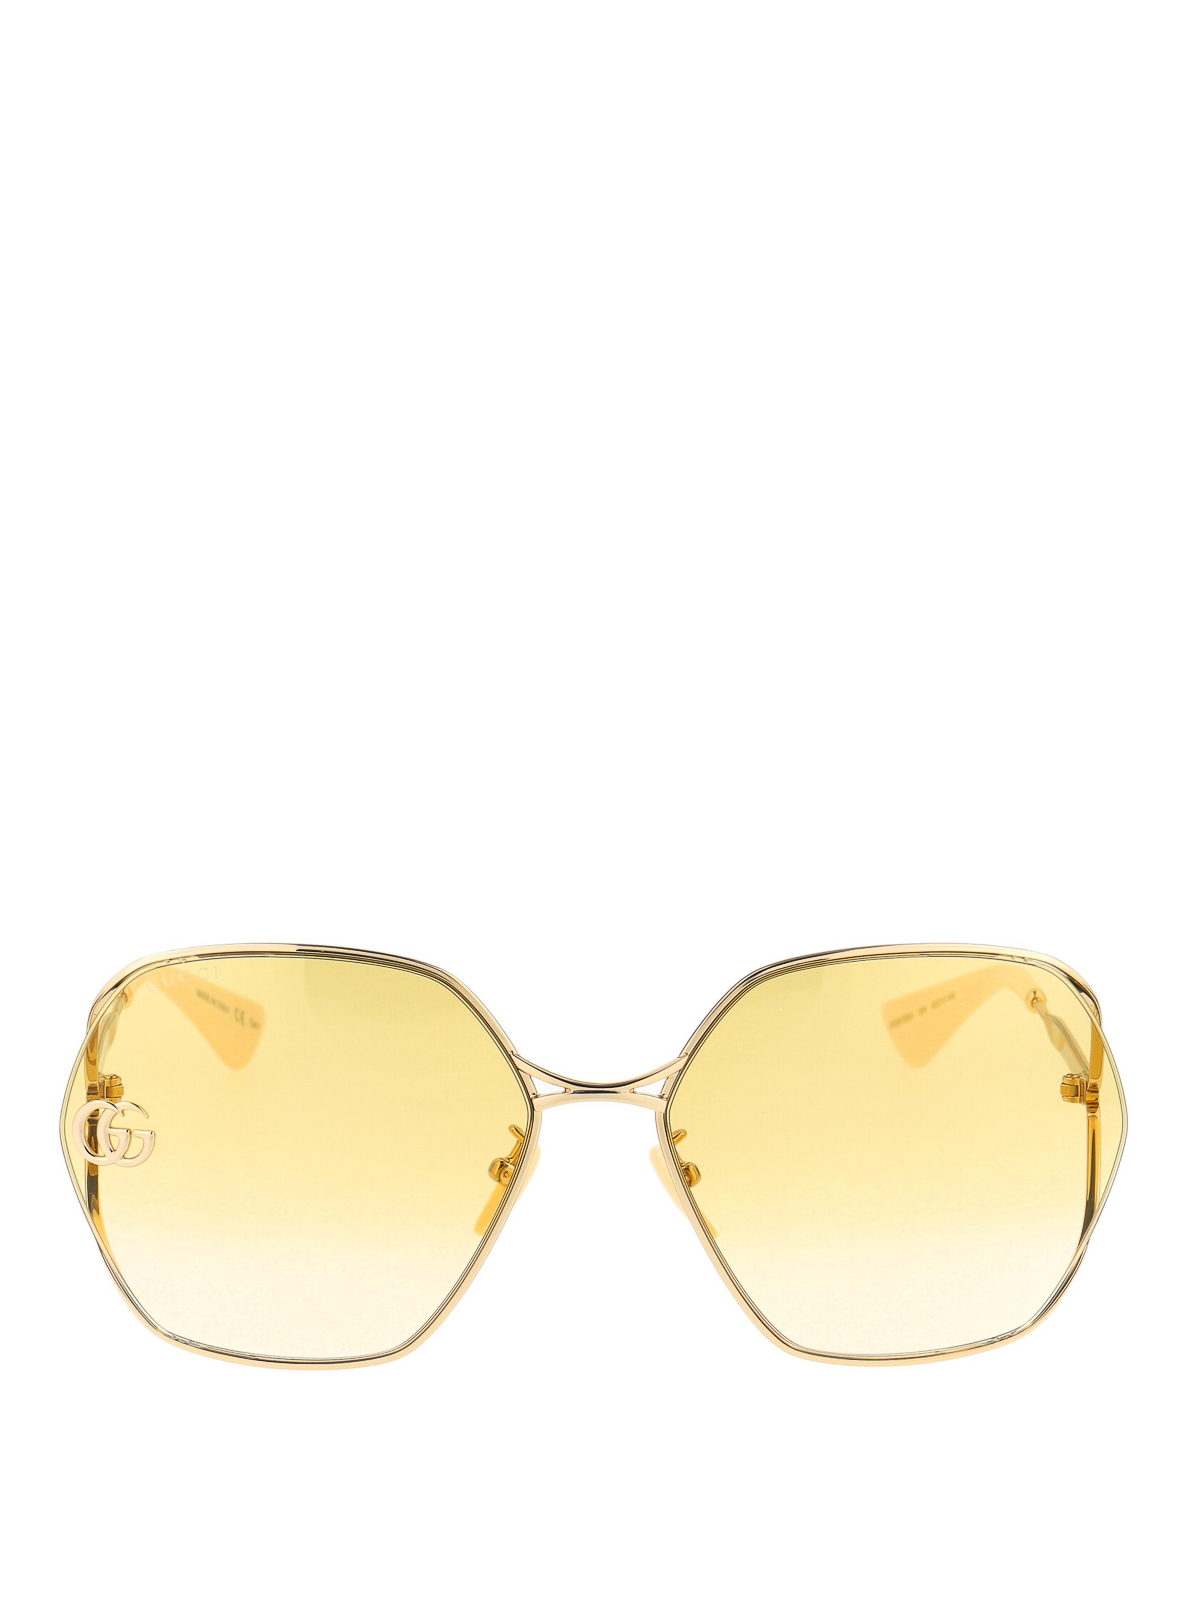 gucci glasses yellow lenses